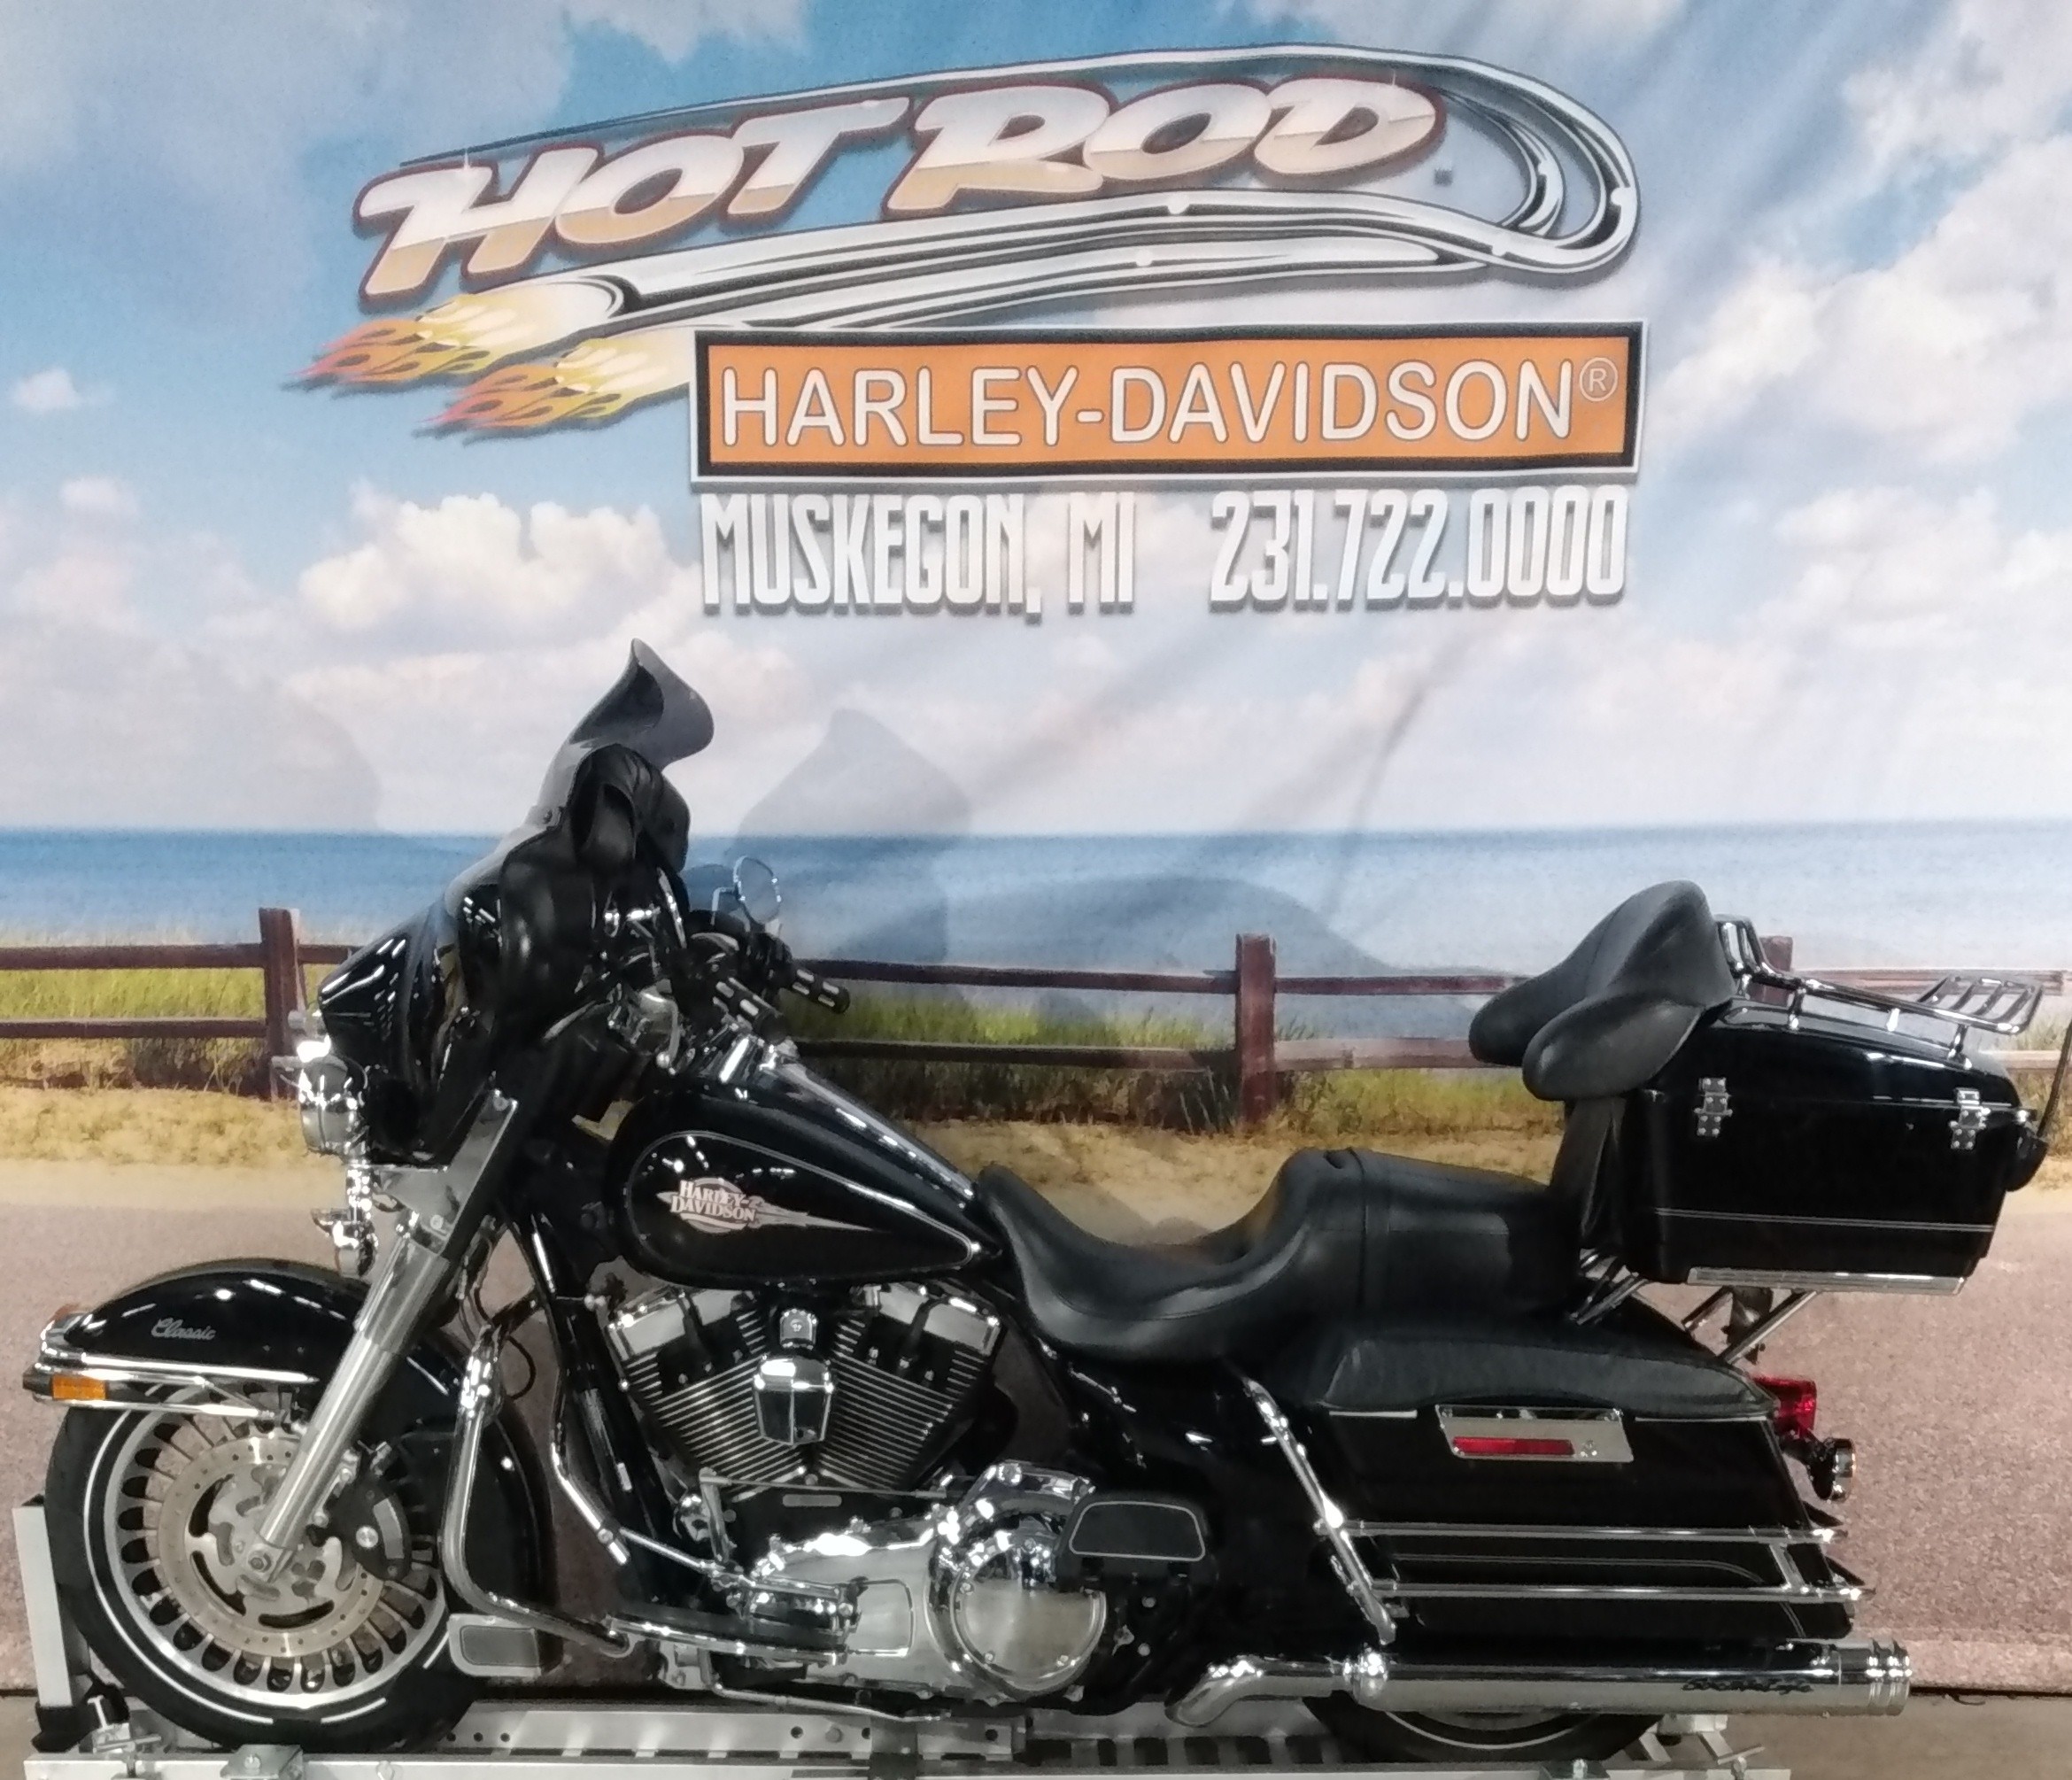 2011 Harley-Davidson Electra Glide Classic at Hot Rod Harley-Davidson